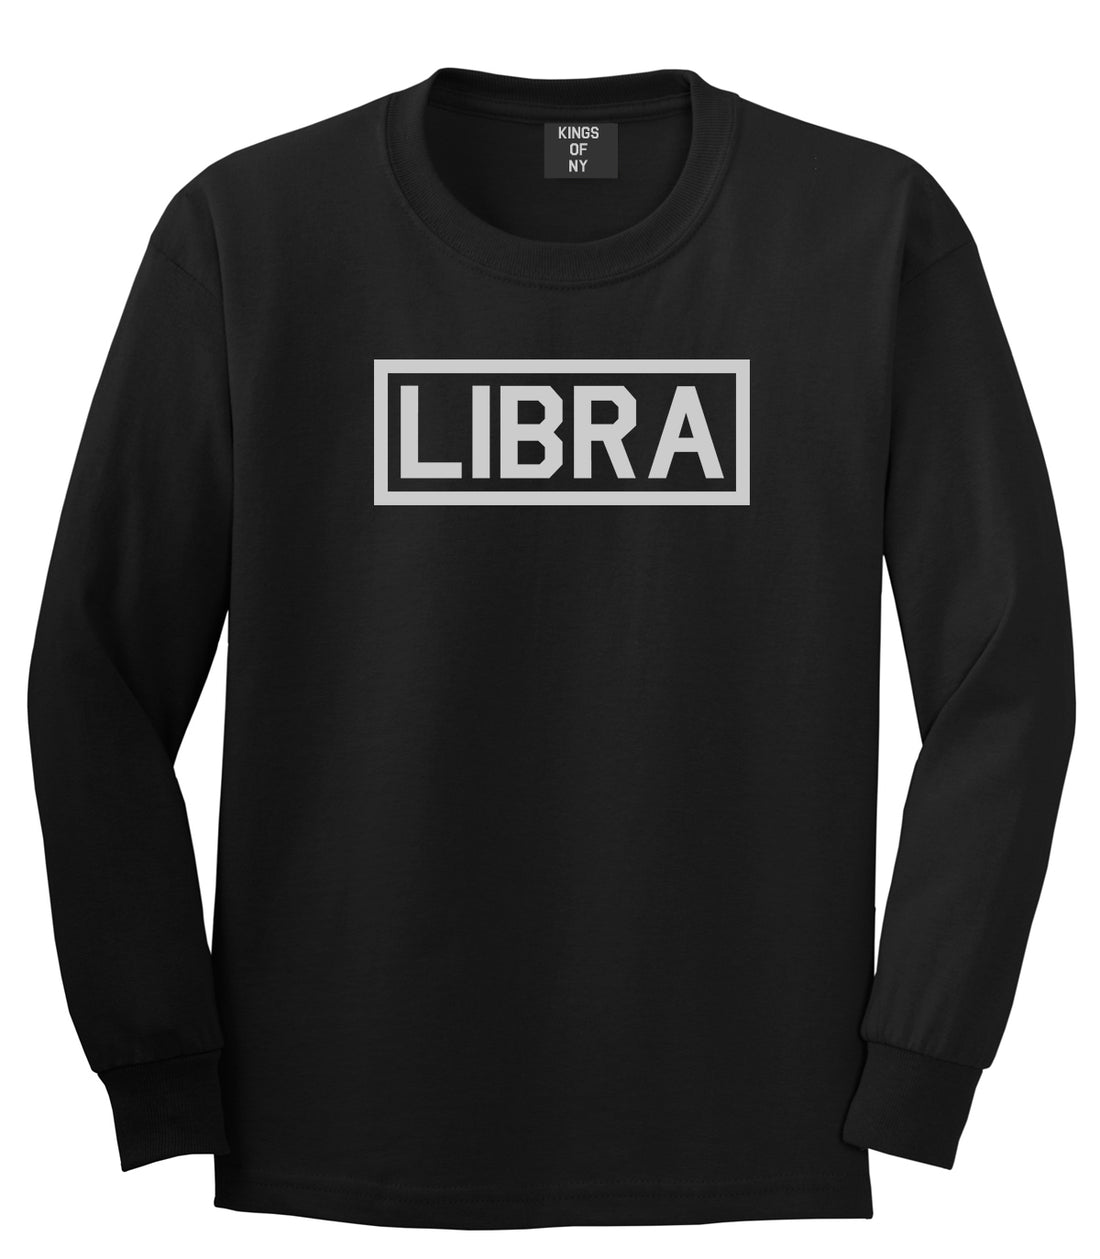 Libra Horoscope Sign Mens Black Long Sleeve T-Shirt by KINGS OF NY